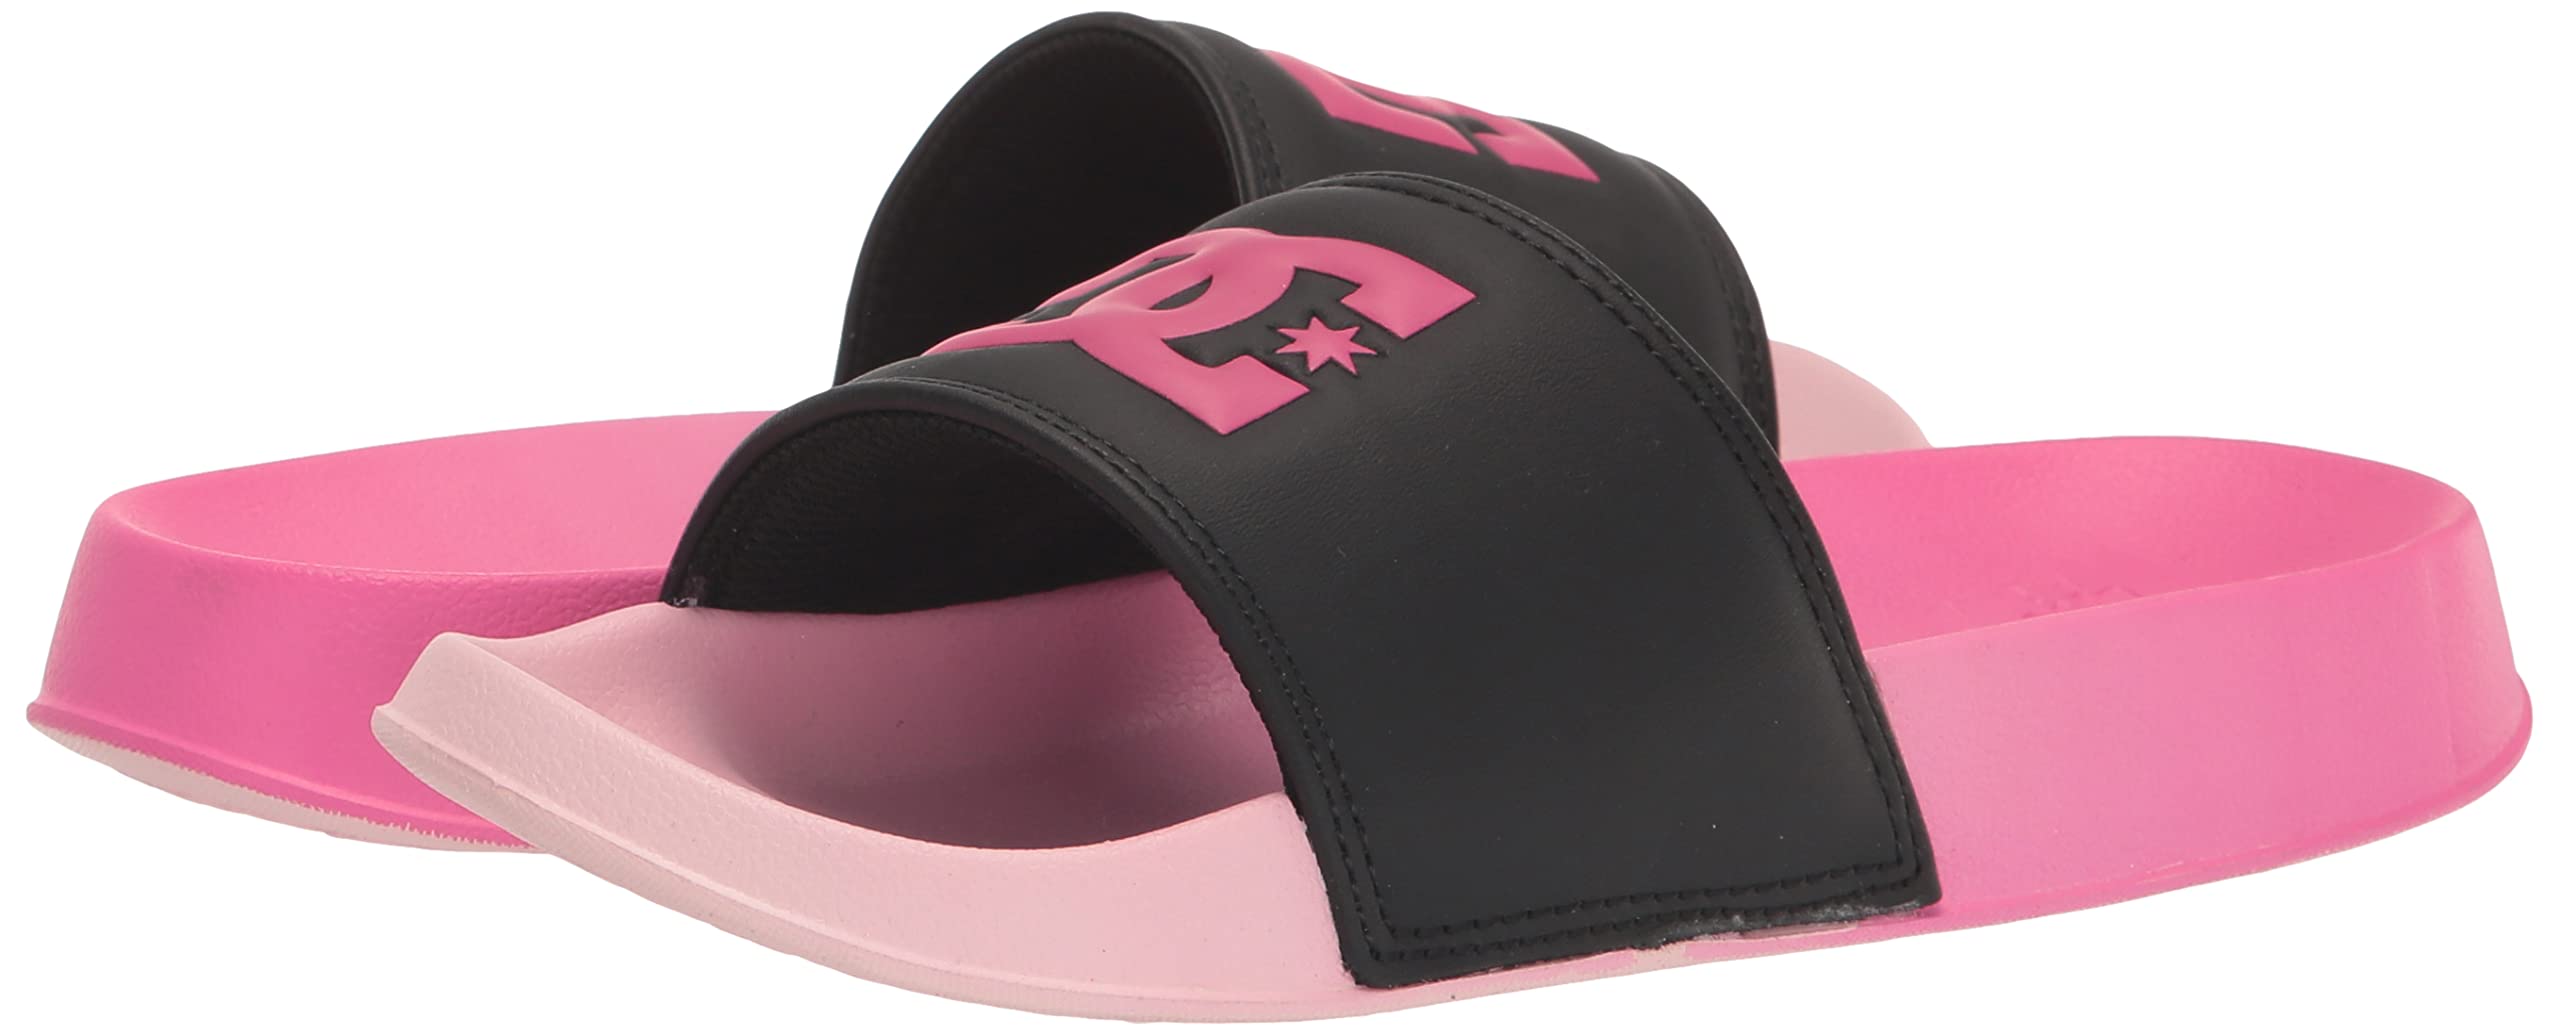 DC Women's Slide Sandal (Vivid Gradient) $9.90 + Free Shipping w/ Prime or on $35+